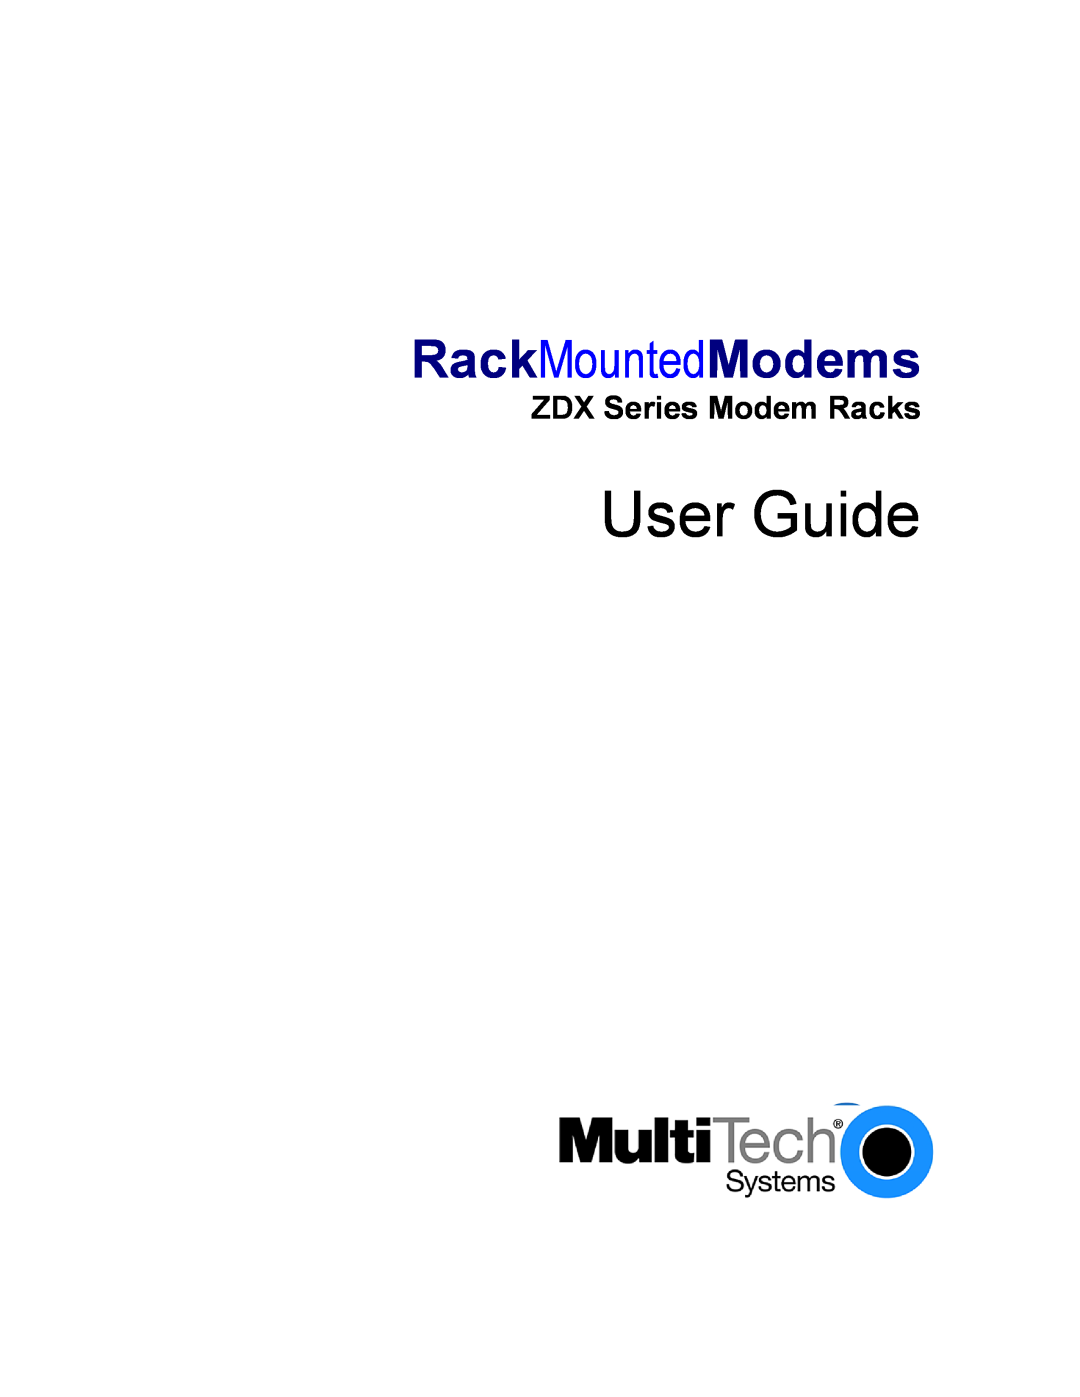 Multi-Tech Systems manual User Guide, RackMountedModems, ZDX Series Modem Racks 